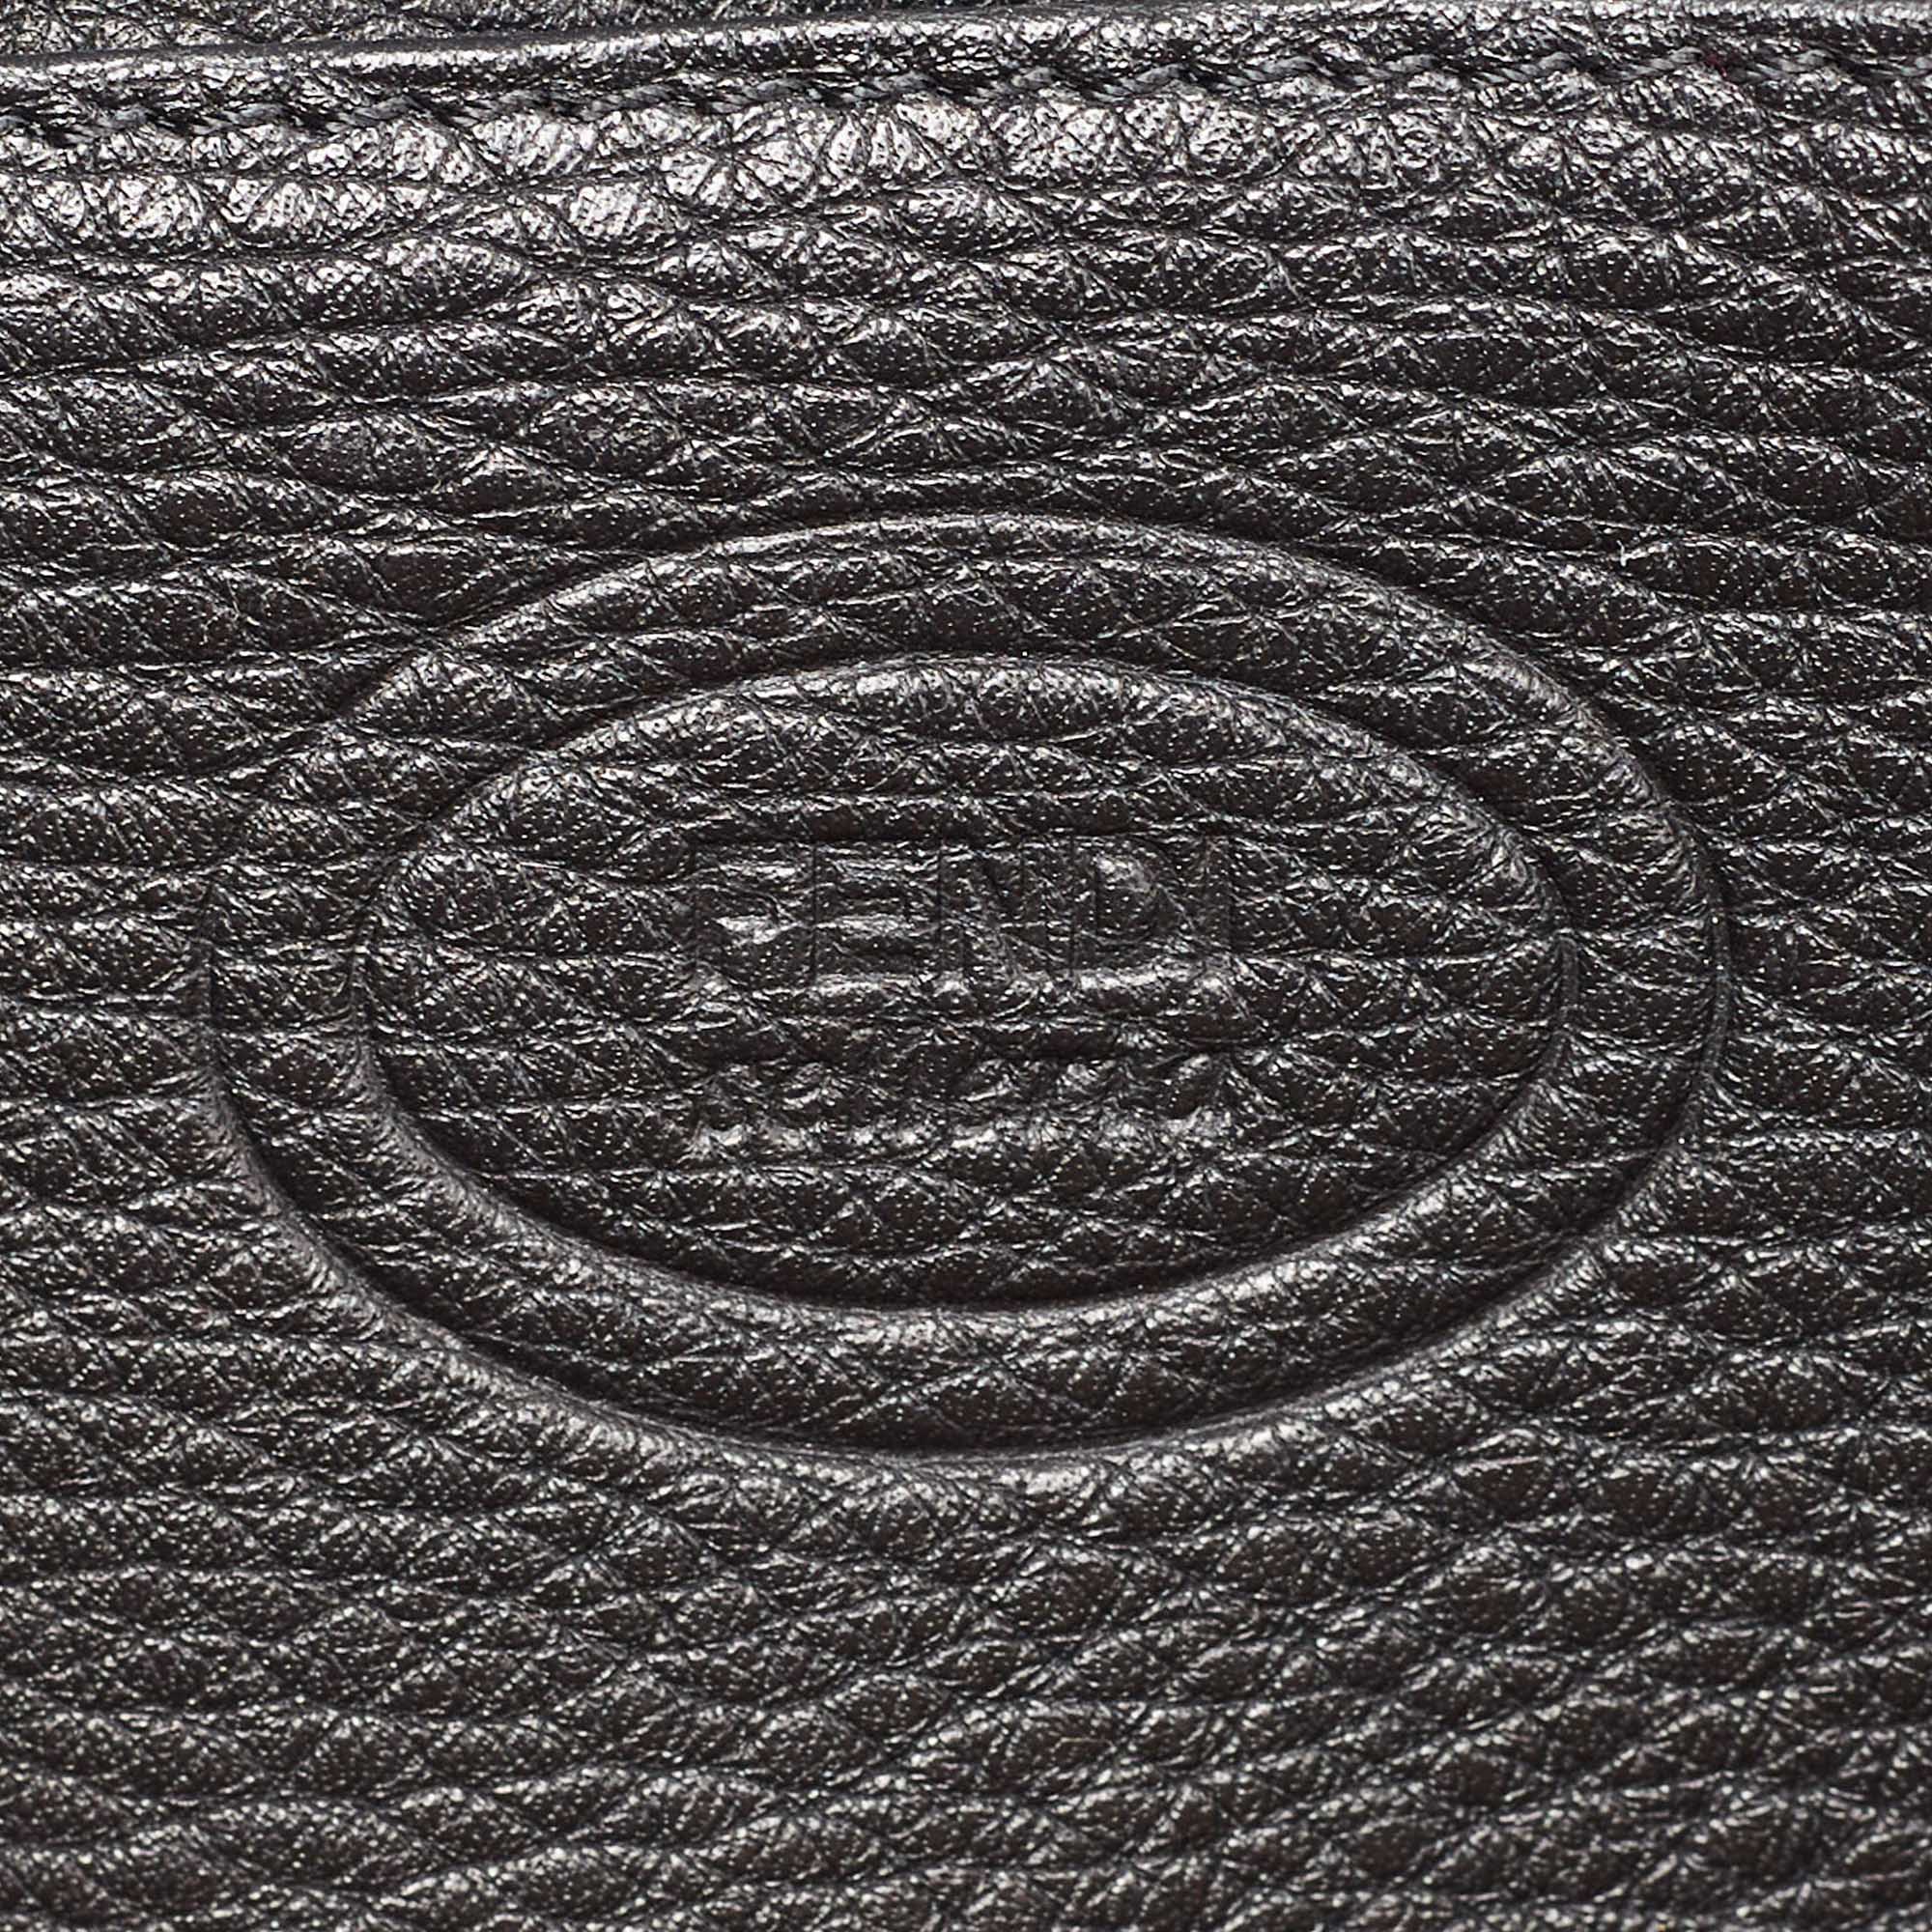 Fendi Dark Brown/Red Selleria Leather Flap Clutch